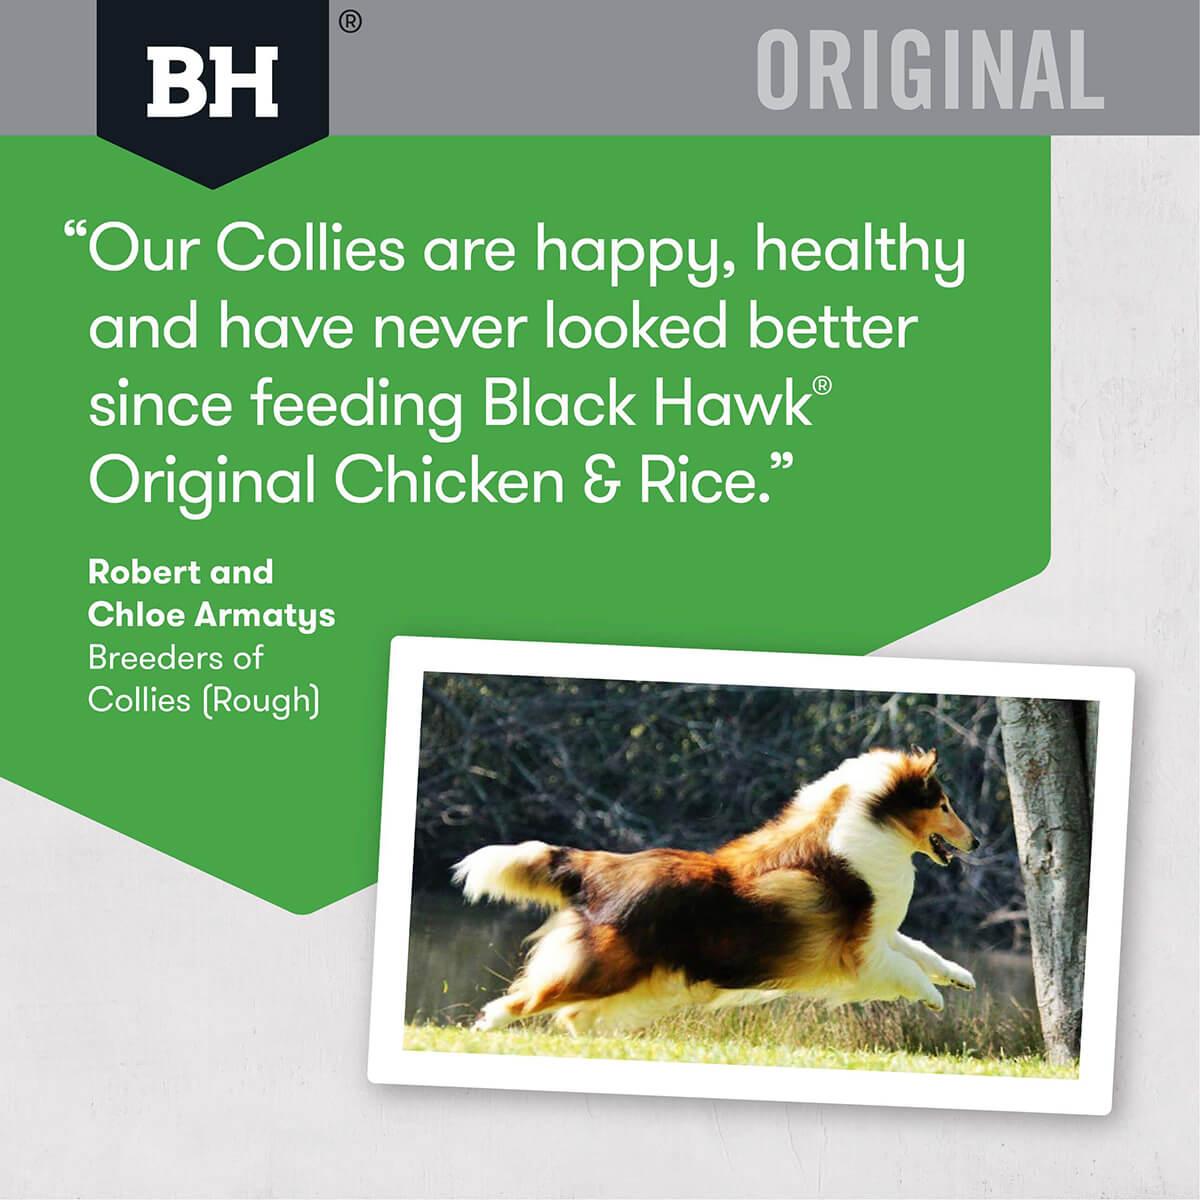 Black Hawk Original Adult Chicken & Rice Dry Dog Food